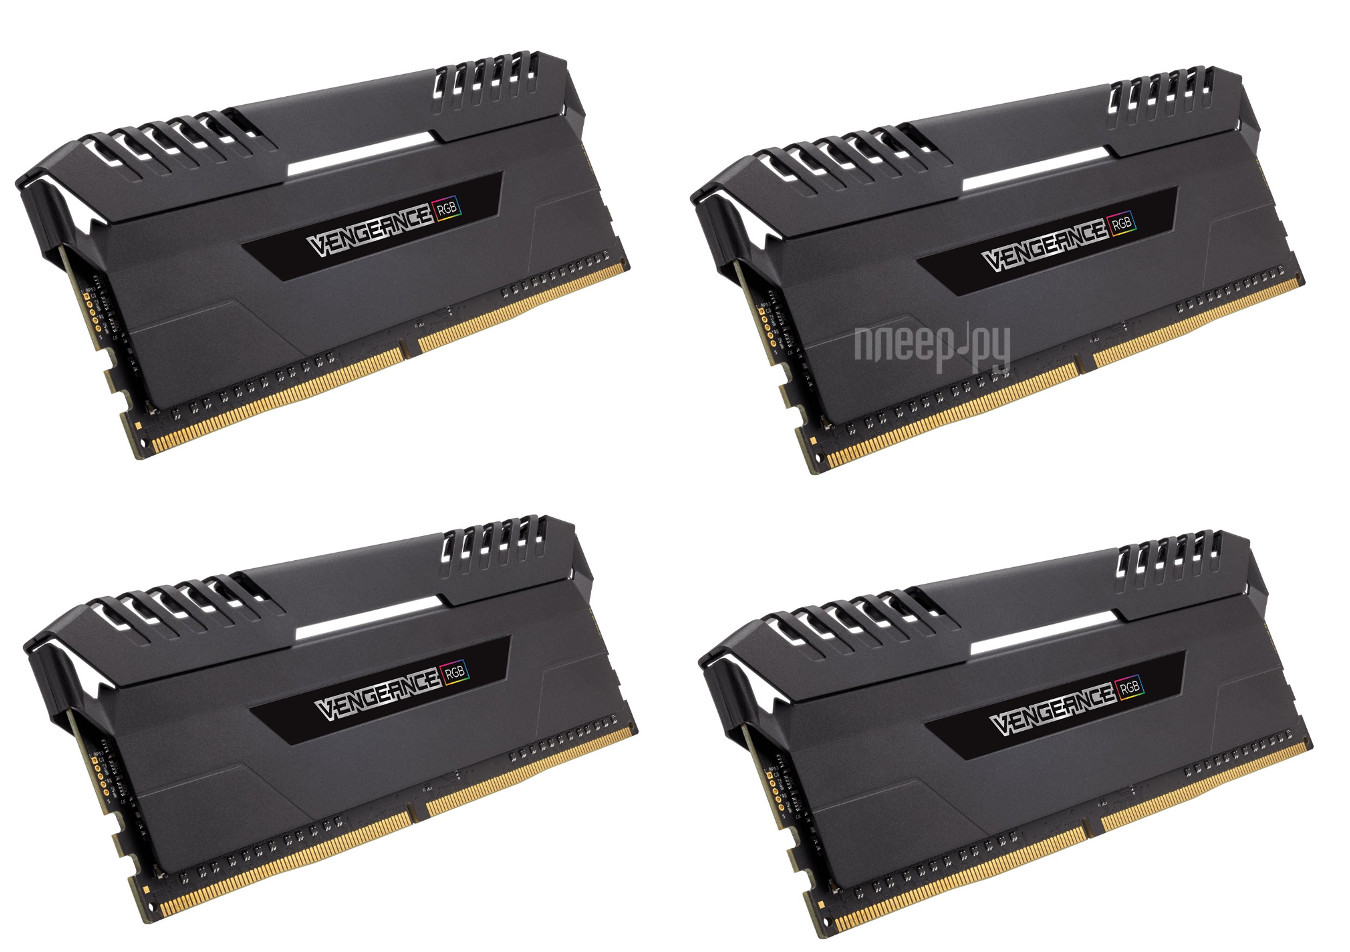   Corsair Vengeance RGB DDR4 DIMM 2666MHz PC4-21300 CL16 - 32Gb KIT (4x8Gb) CMR32GX4M4A2666C16